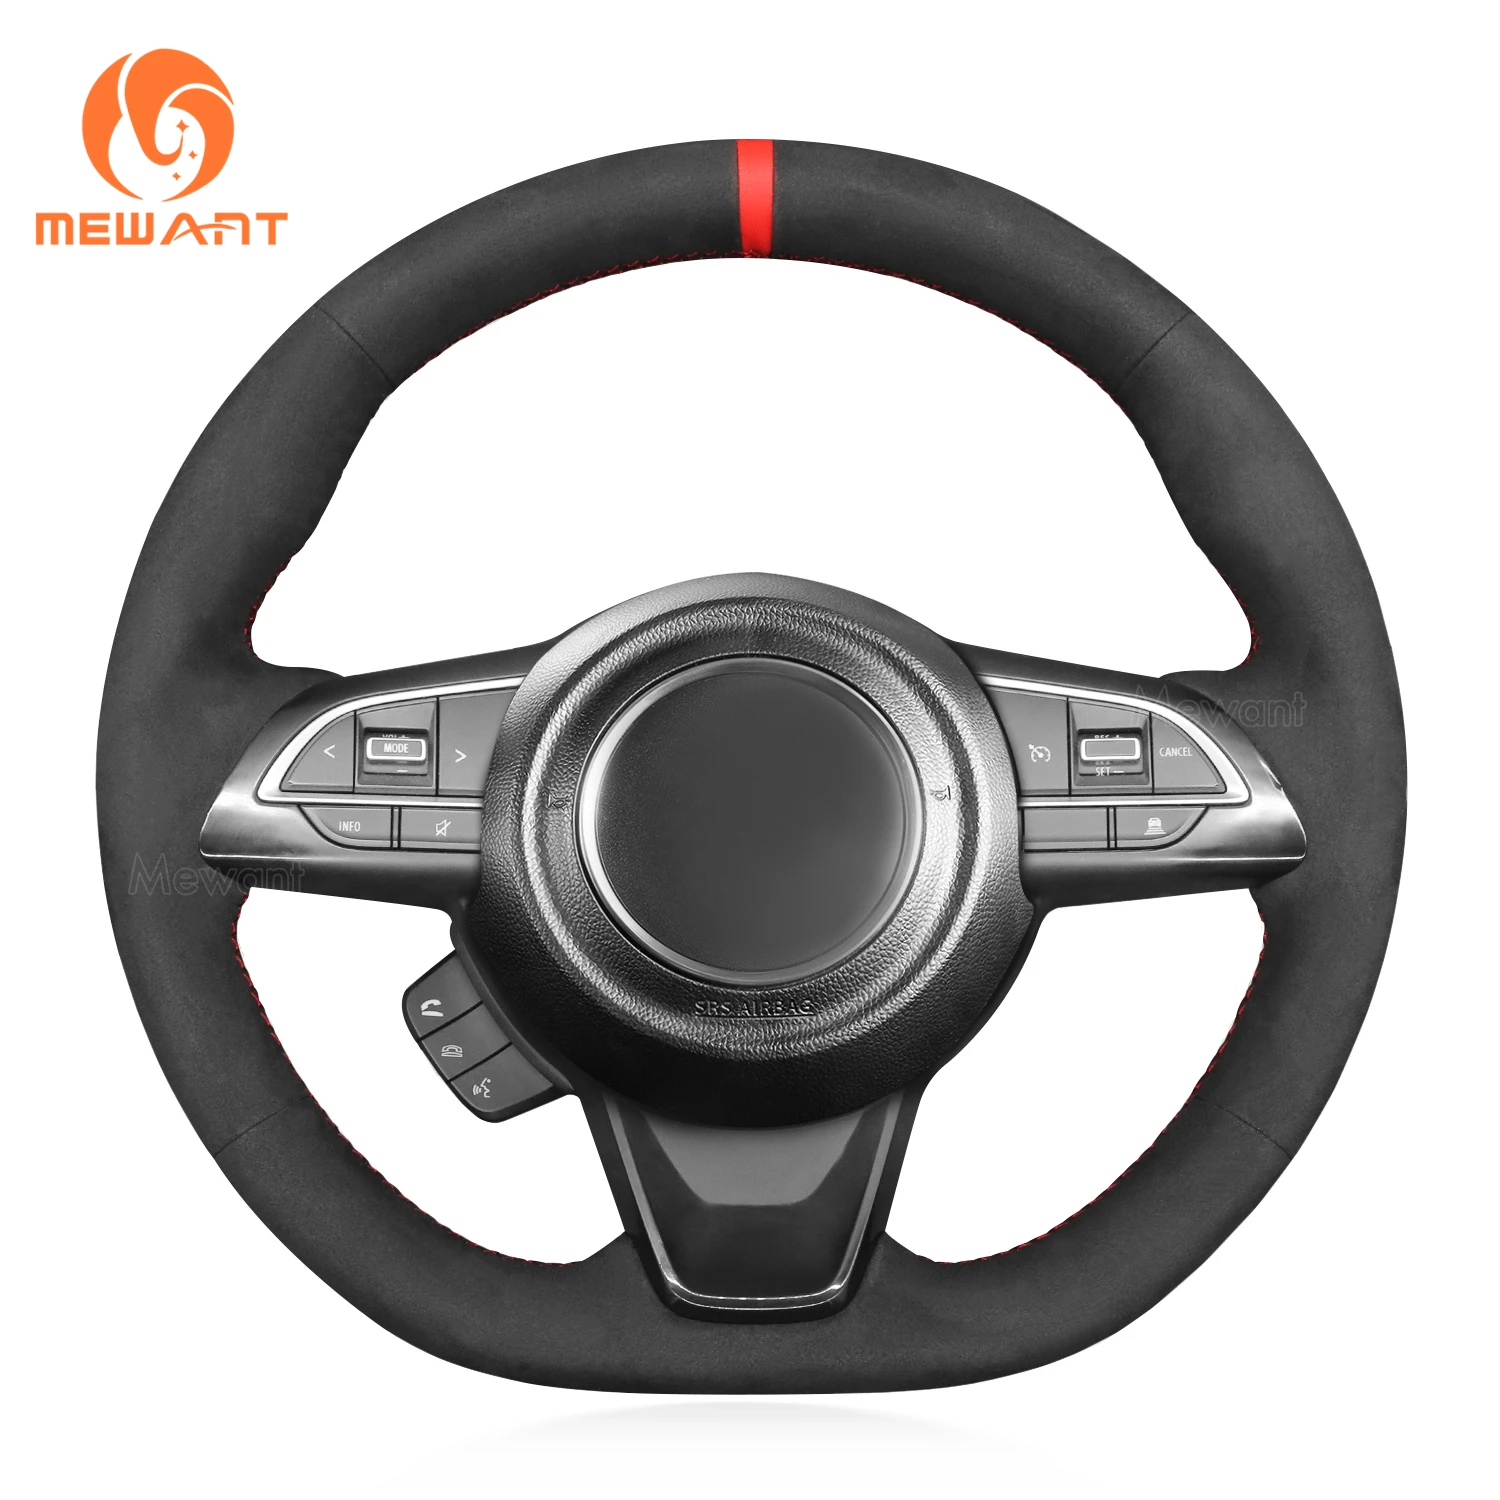 

MEWANT Black Suede Car Steering Wheel Cover for Suzuki Swift 2008-2021